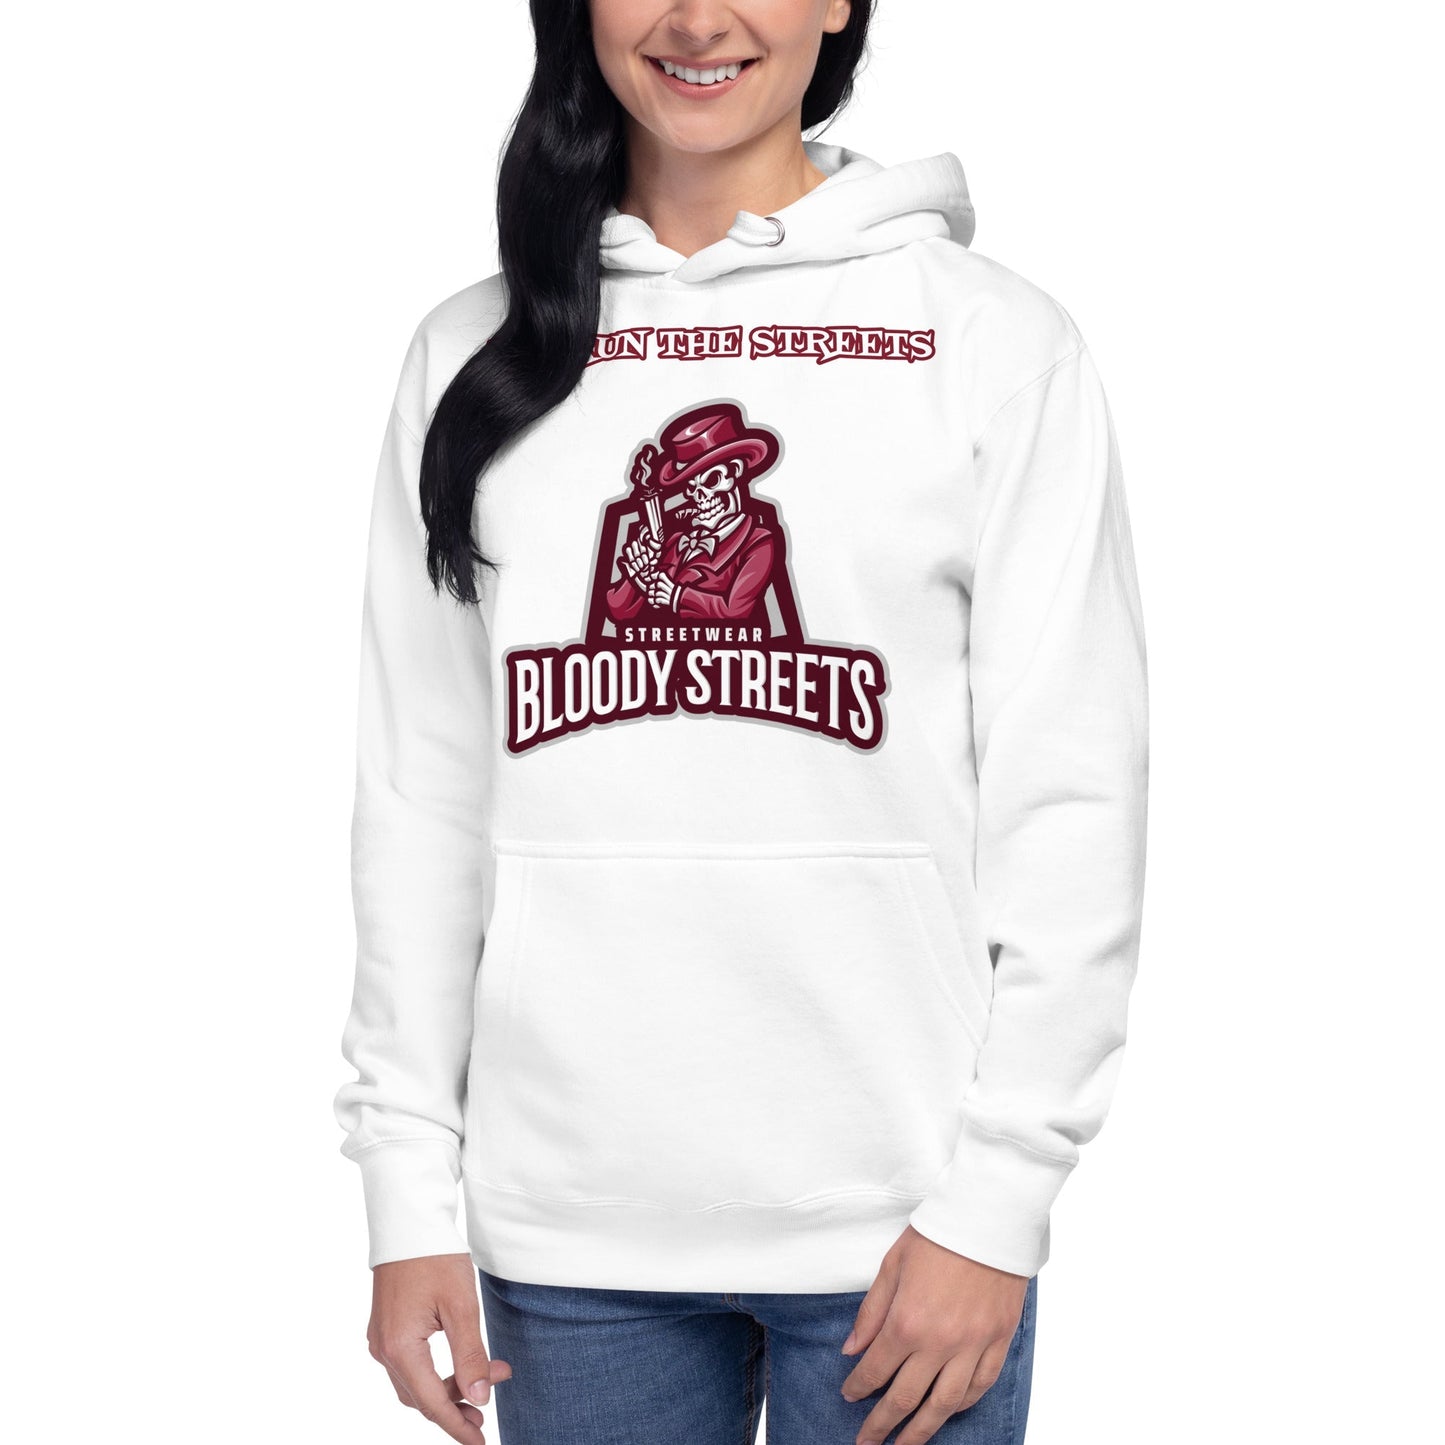 We Run The Streets - BLOODY-STREETS.DE Streetwear Herren und Damen Hoodies, T-Shirts, Pullis